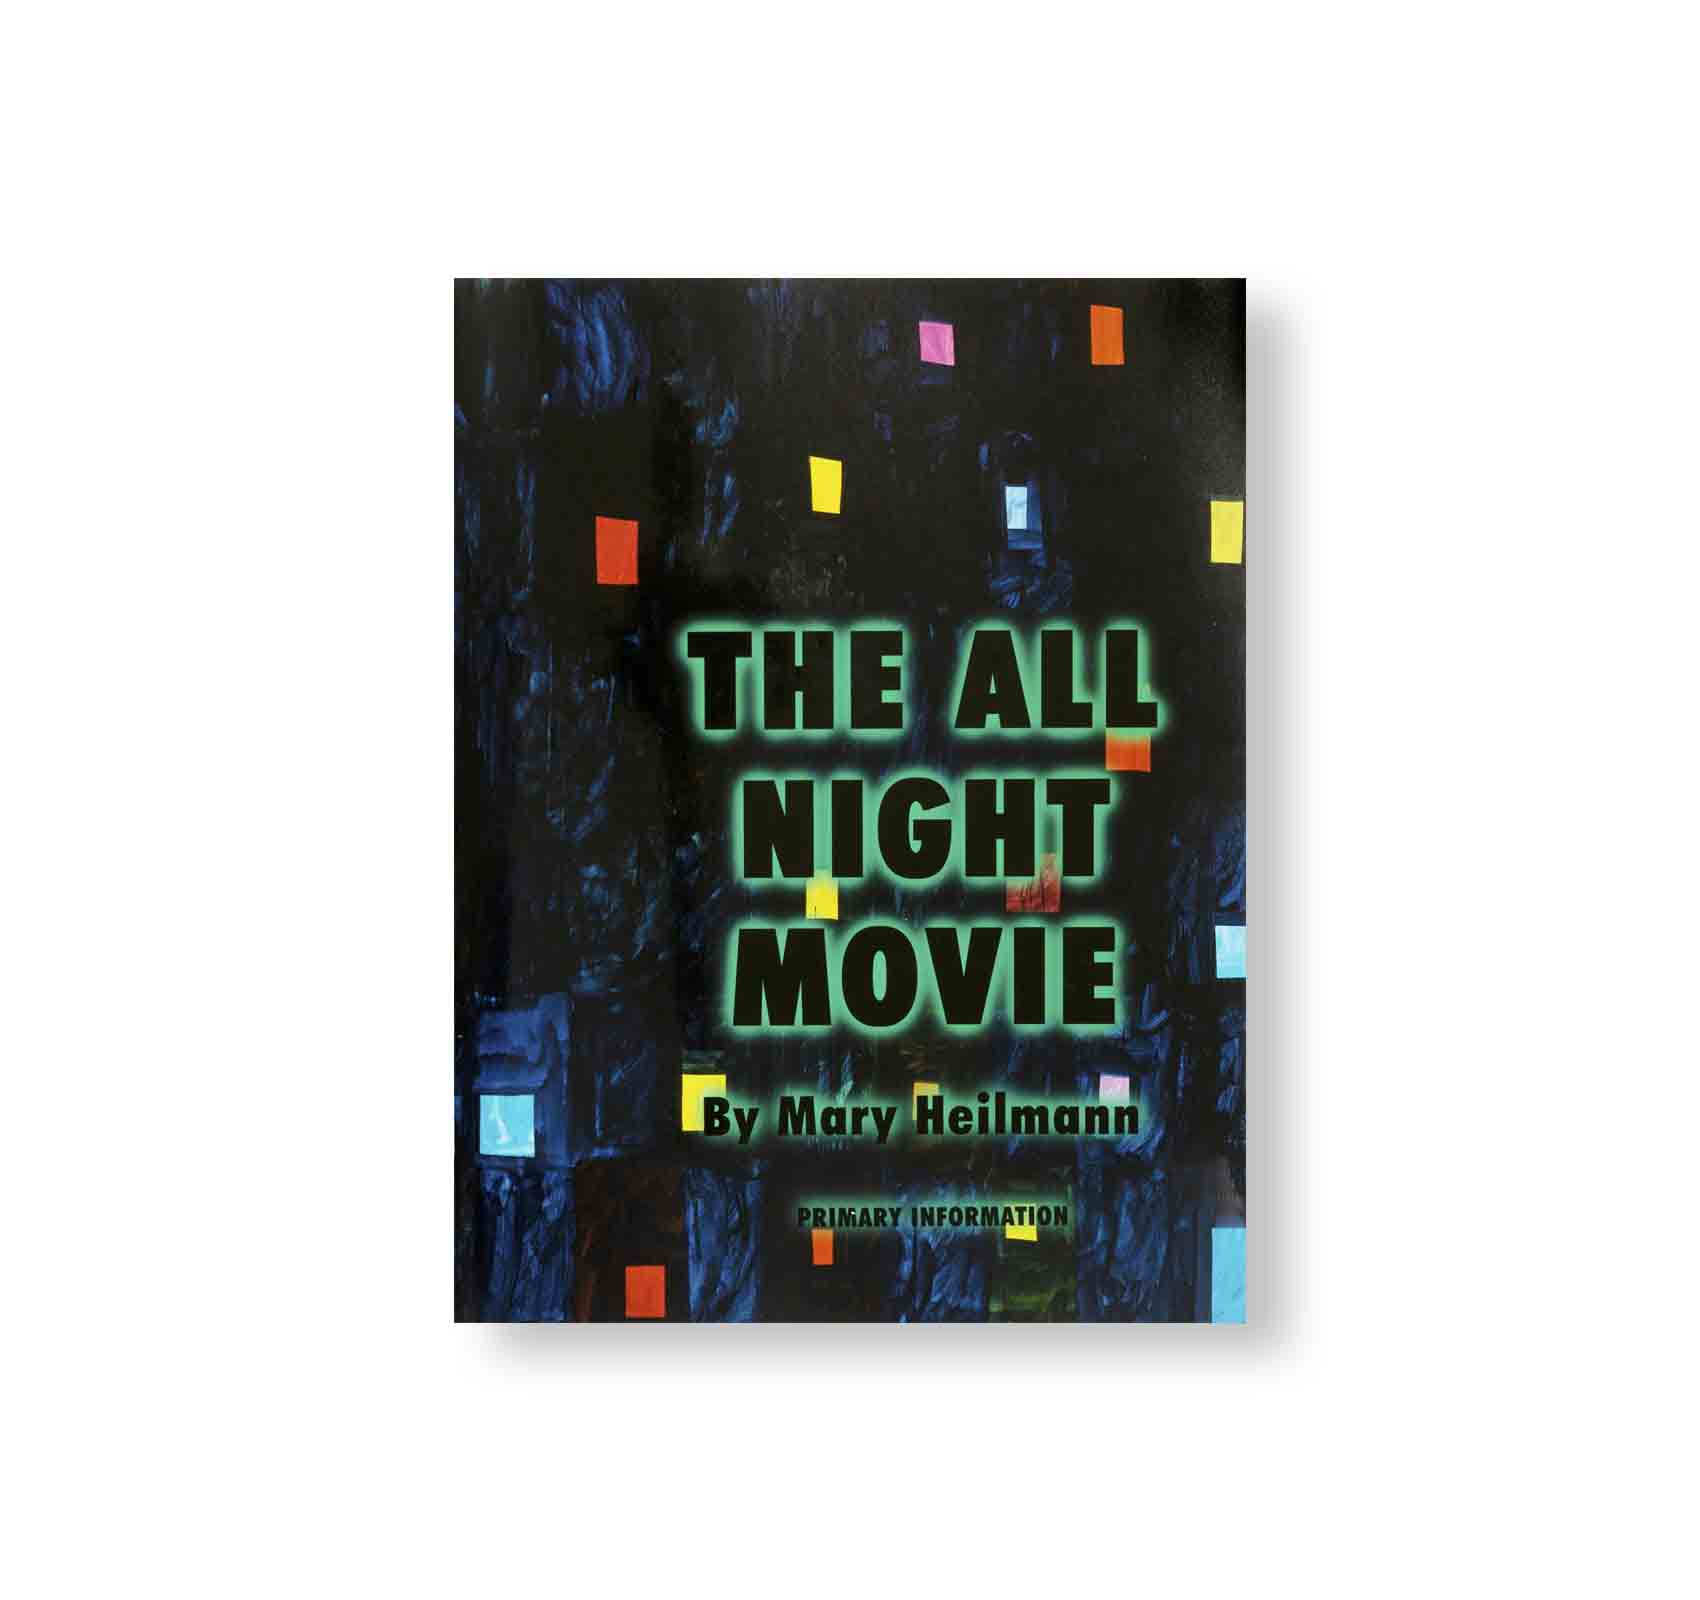 THE ALL NIGHT MOVIE by Mary Heilmann